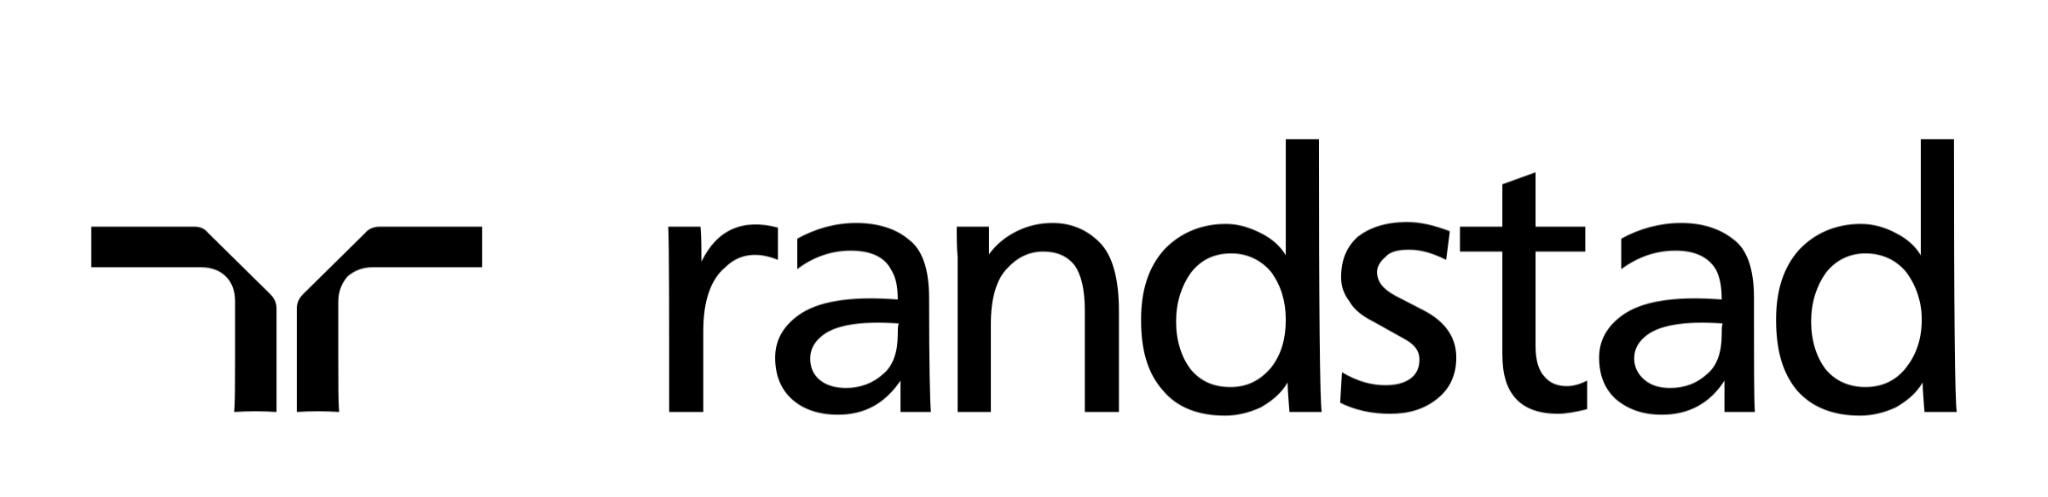 randstad-logo-black-transparent-bg